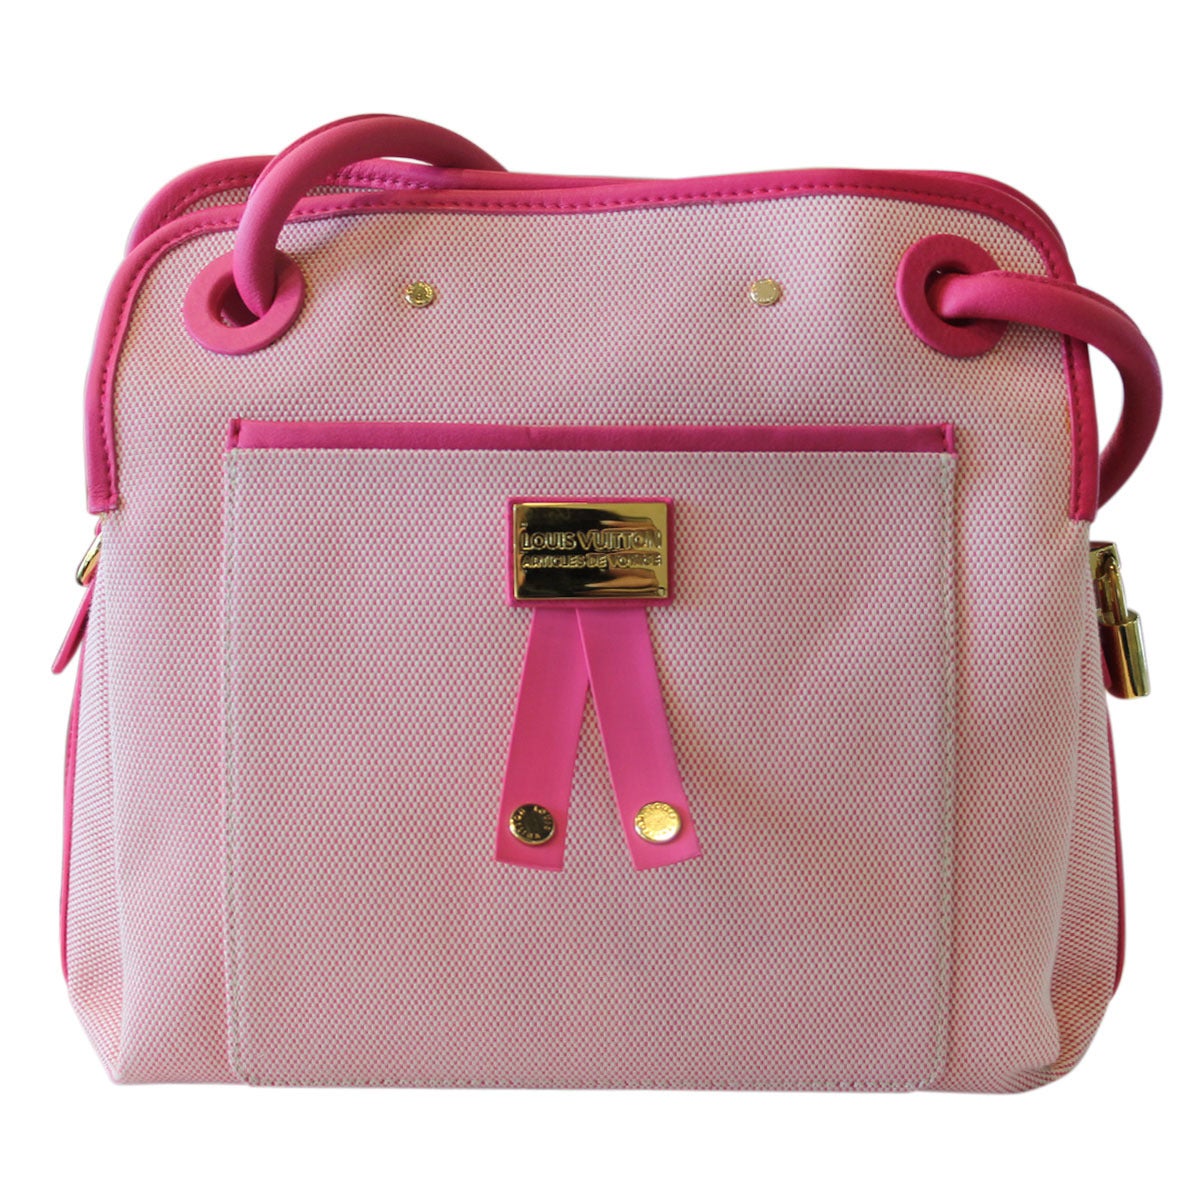 Brand: Louis Vuitton
Handles: Pink Leather Rolled Shoulder Straps; Drop: 17.25